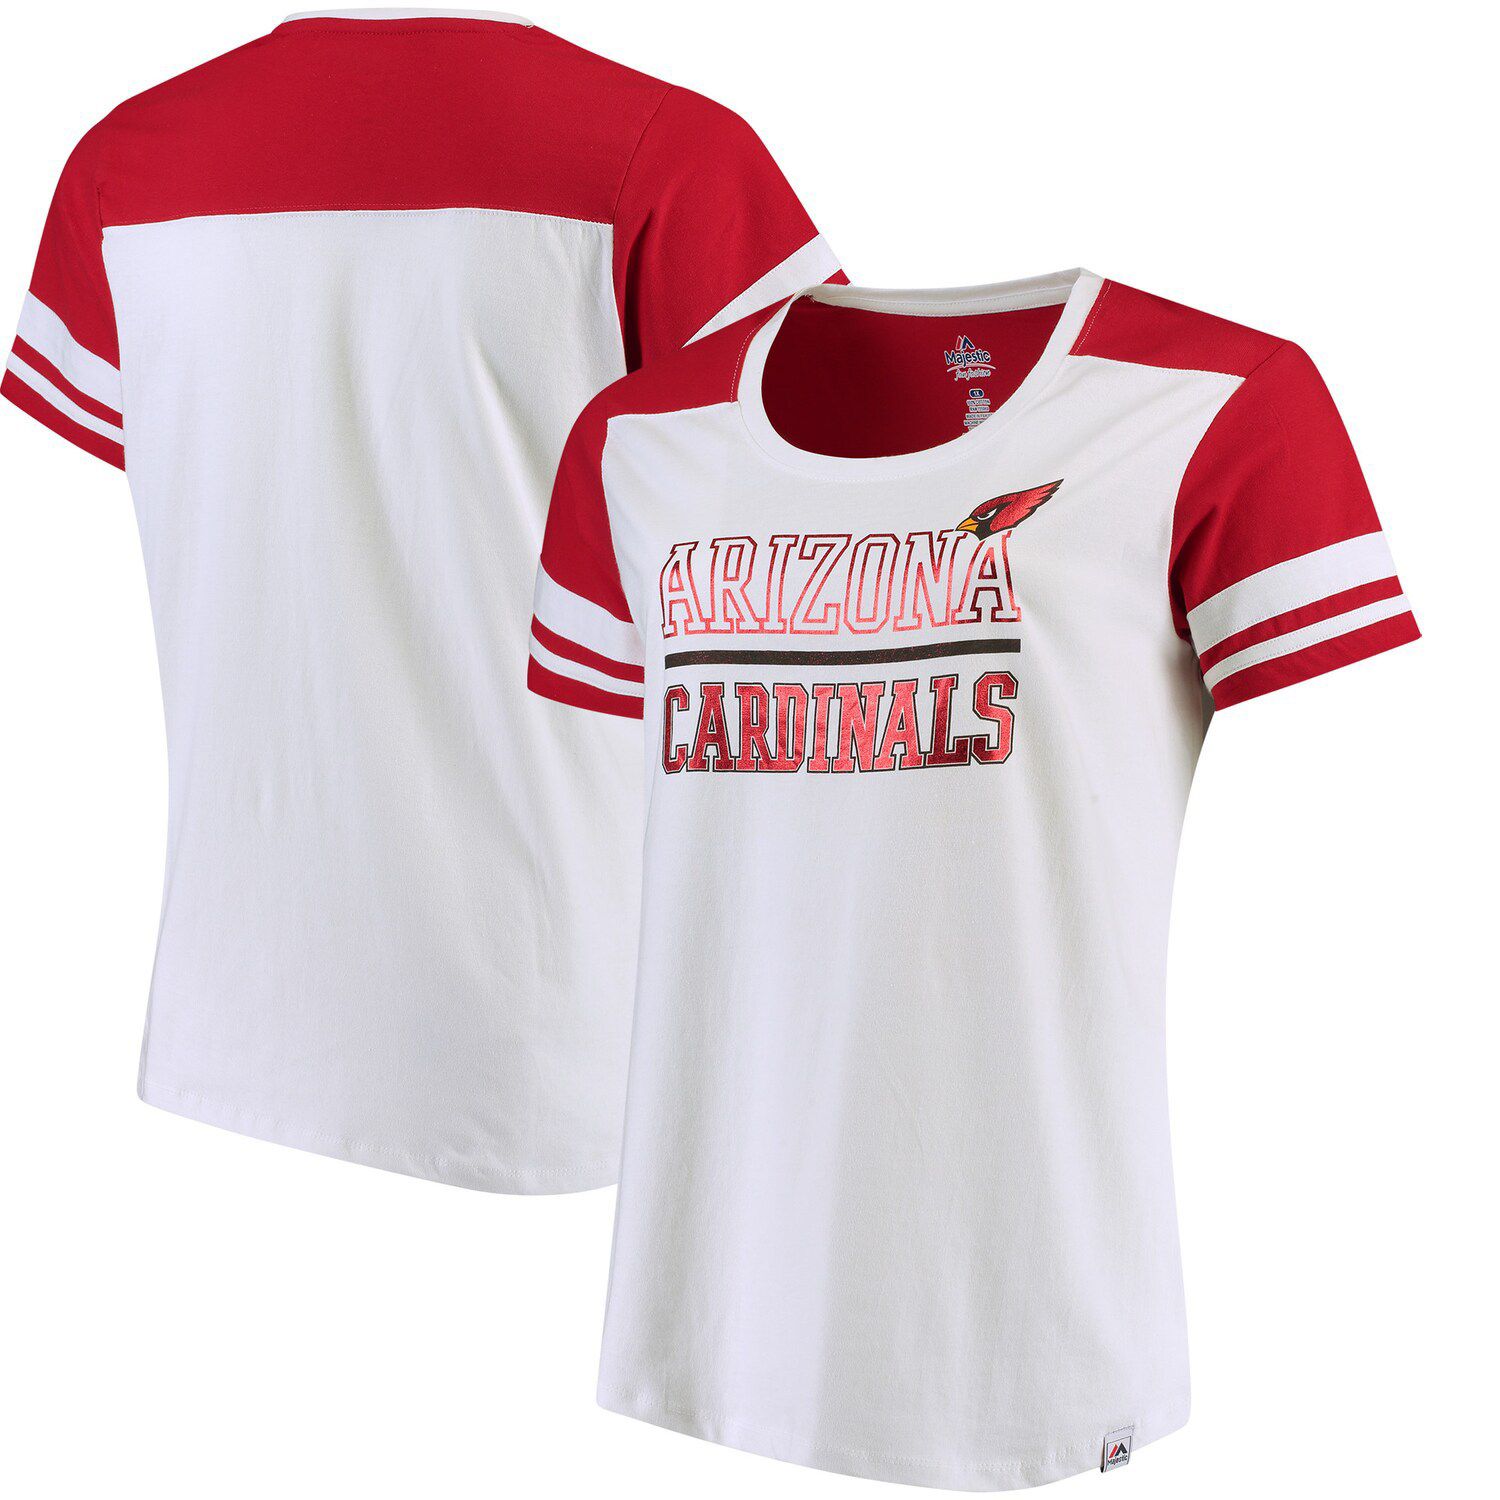 az cardinals bling shirt